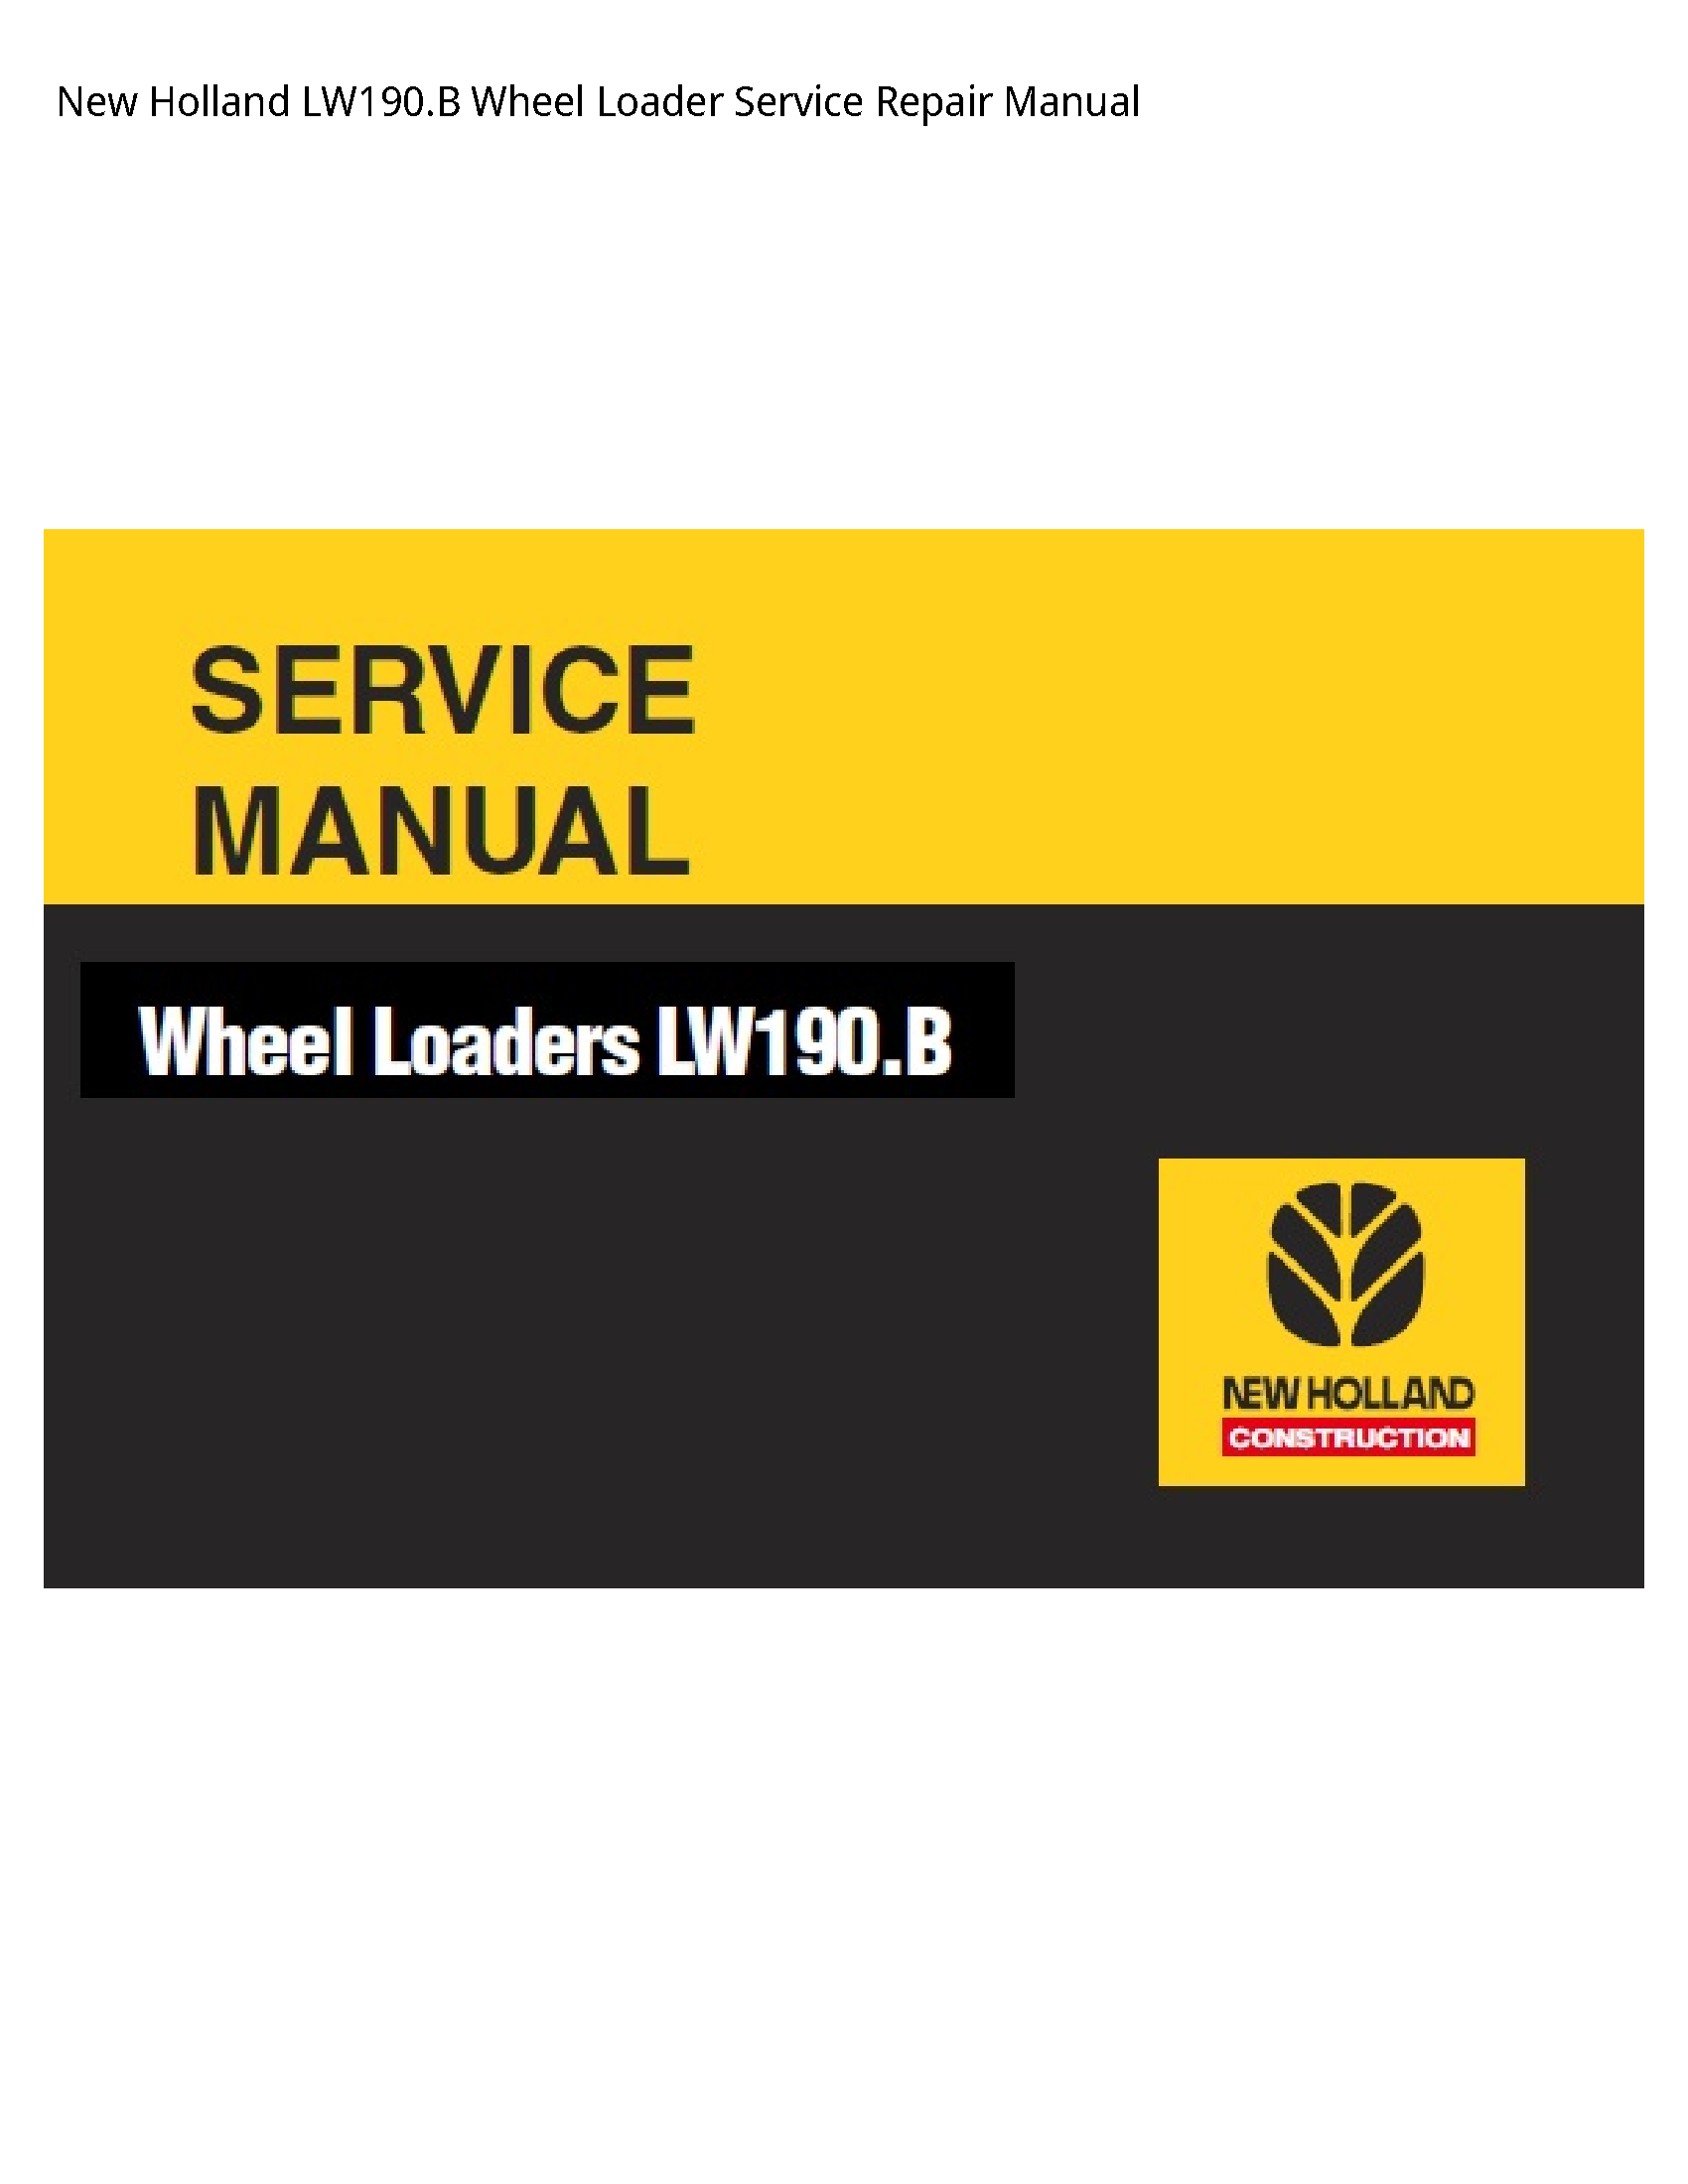 New Holland LW190.B Wheel Loader manual